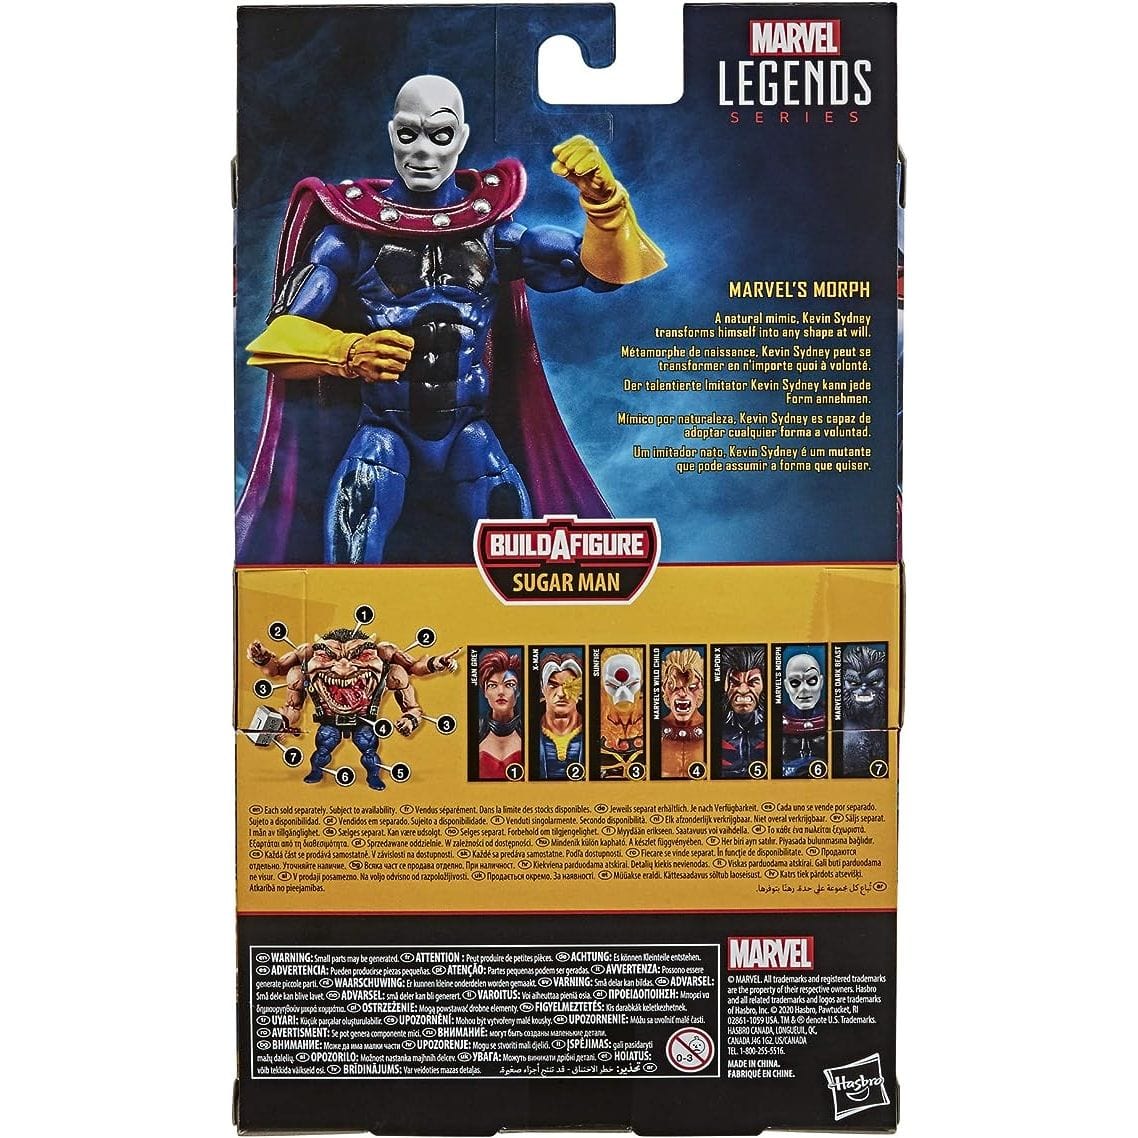 Marvel Legends Series X-Men 6-inch Morph Action Figure - Redshift7toys.com